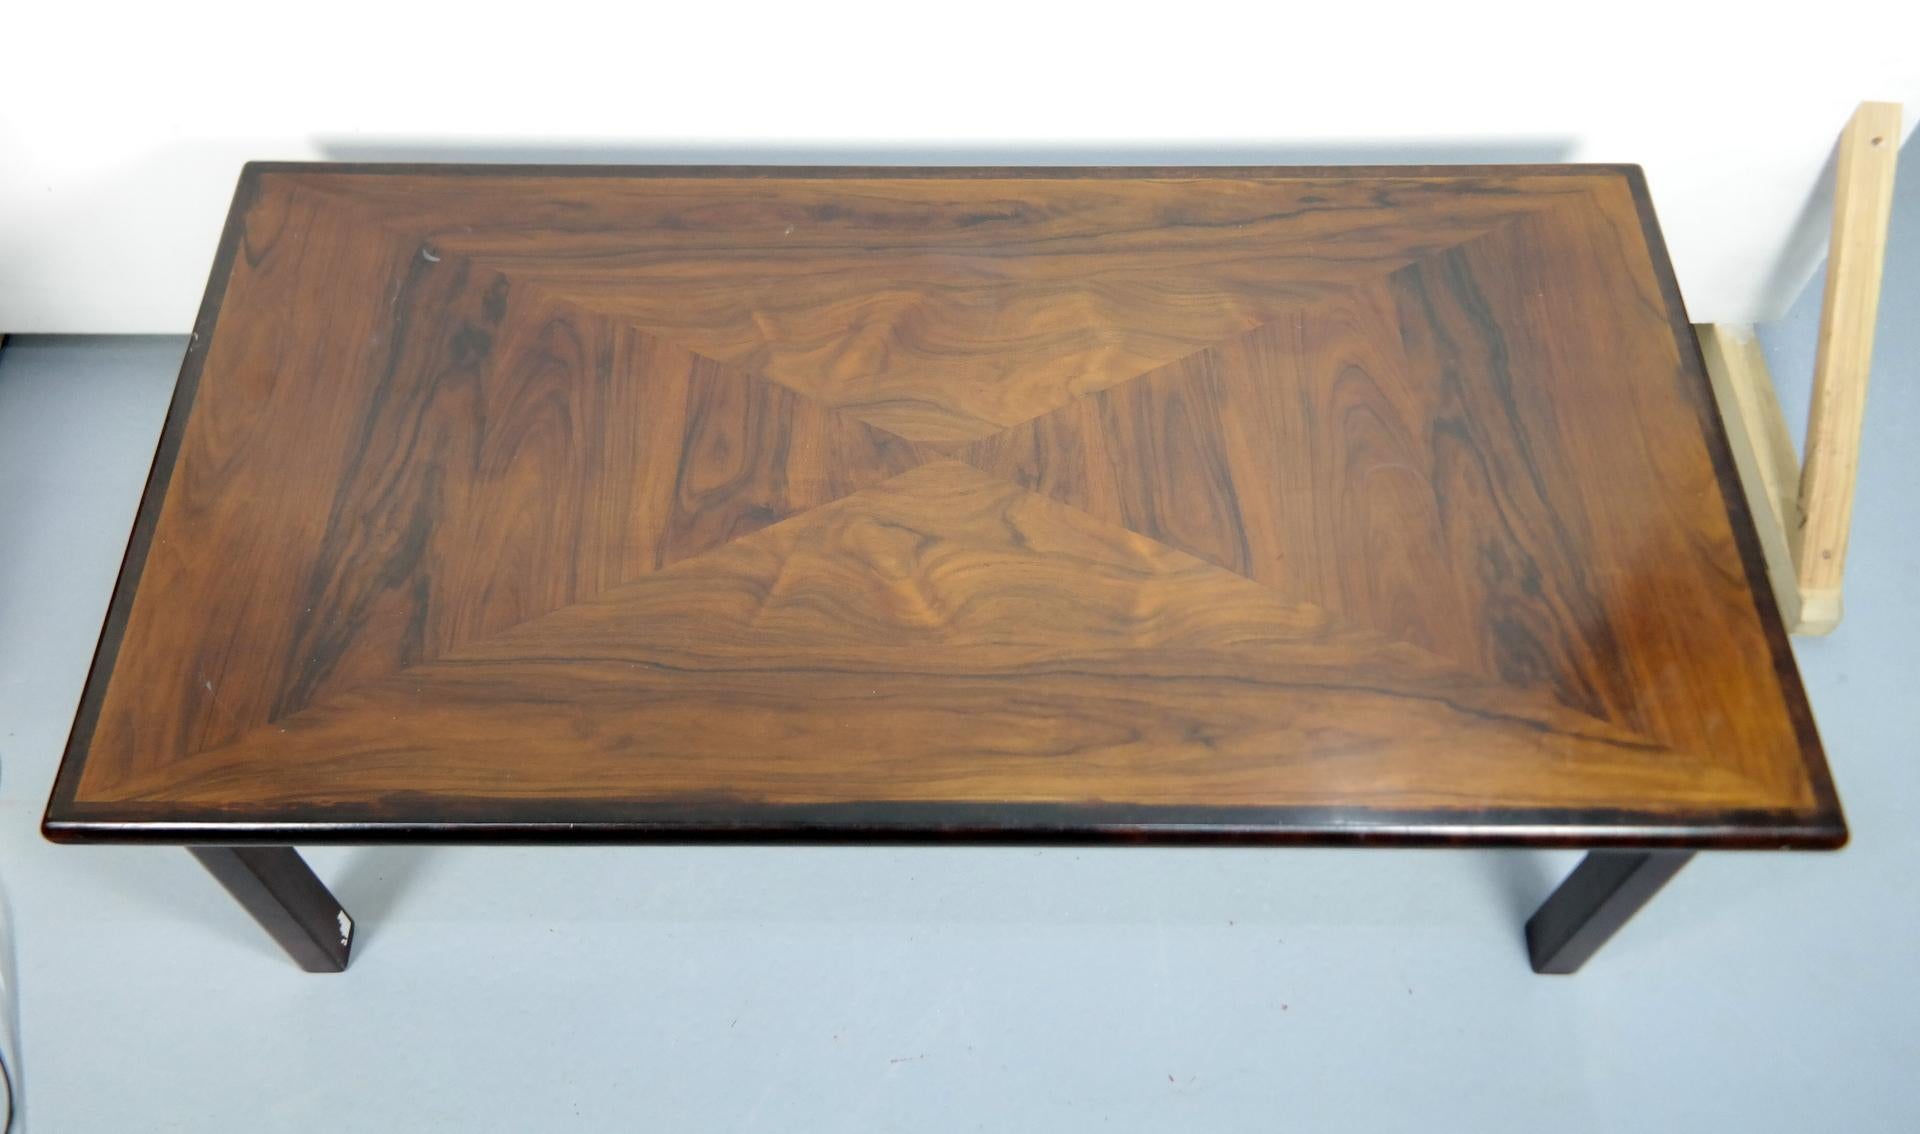 Danish design midcentury rosewood coffee table, 1970s.